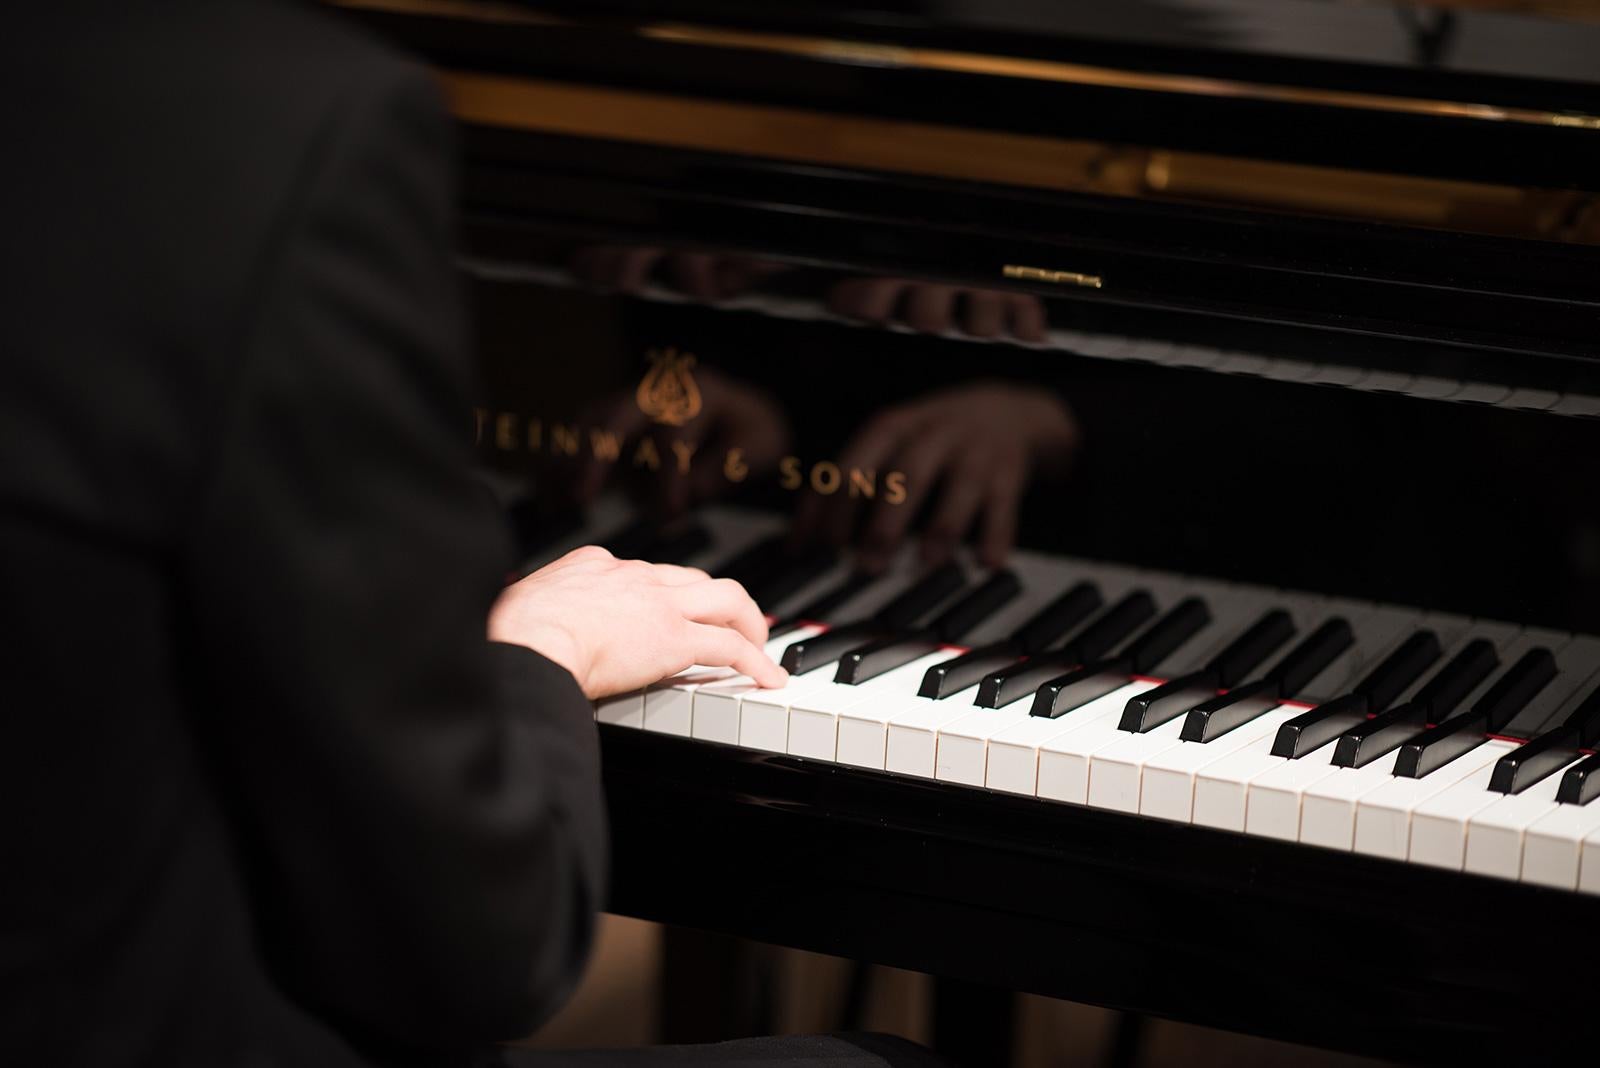 Keyboard of a Steinway piano.